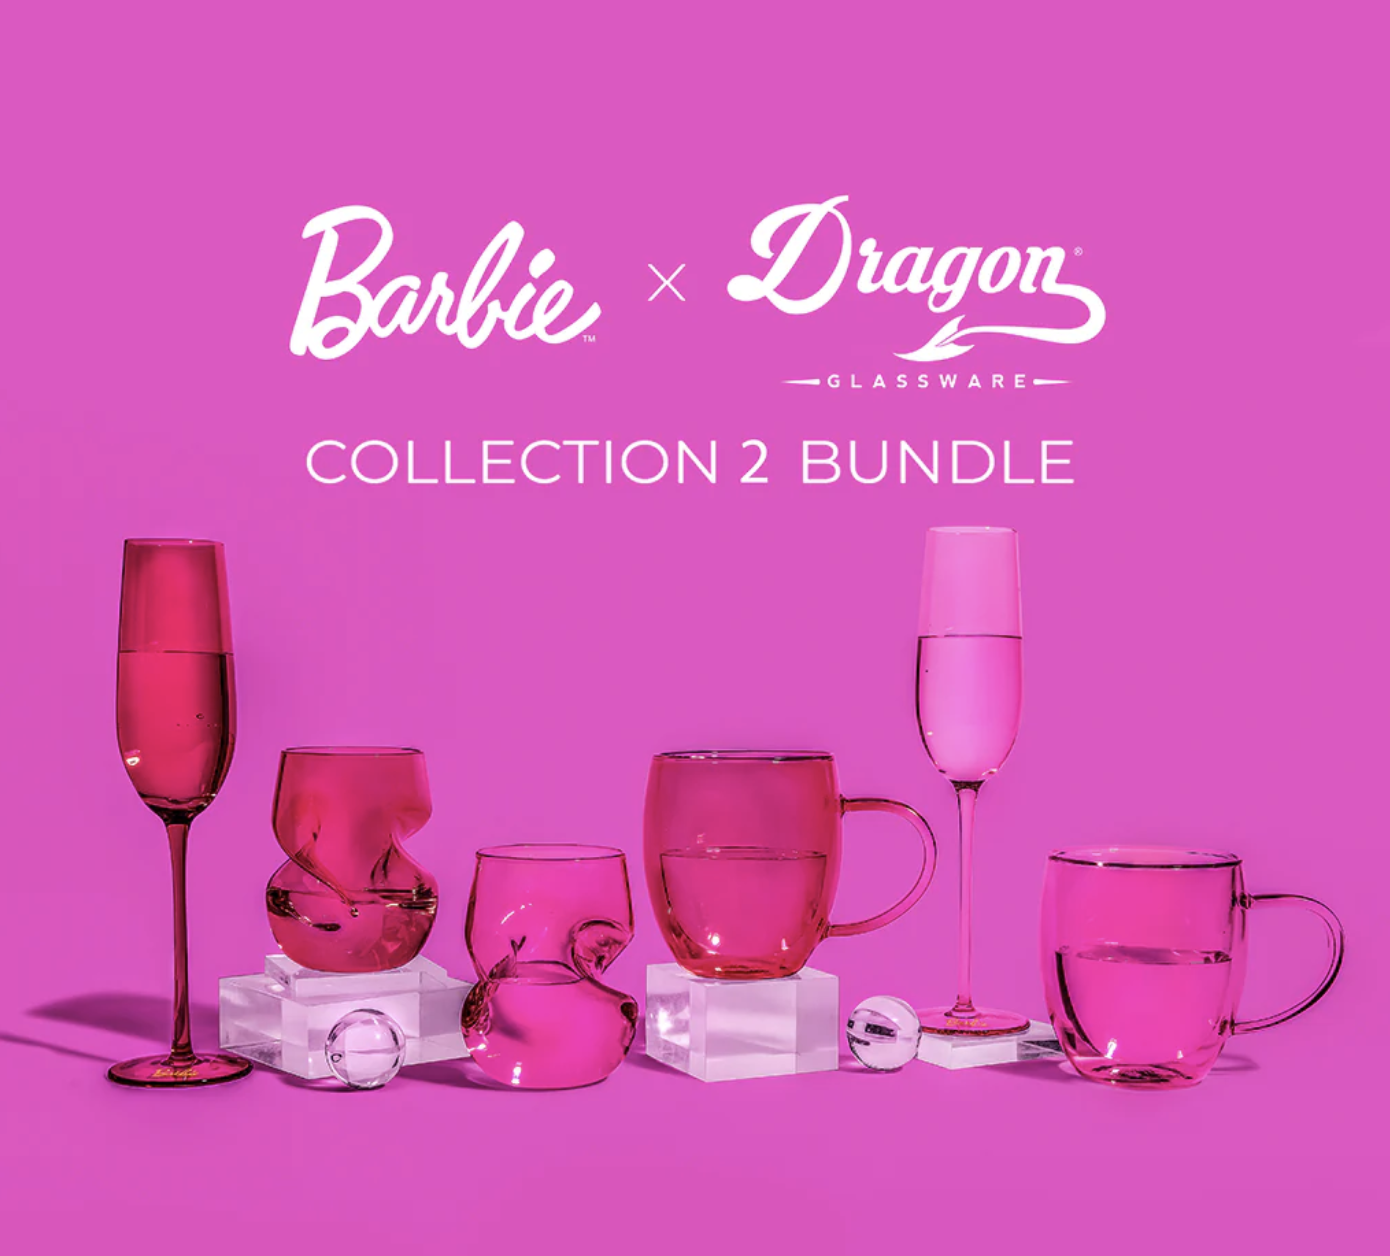 dragon glassware barbie collection